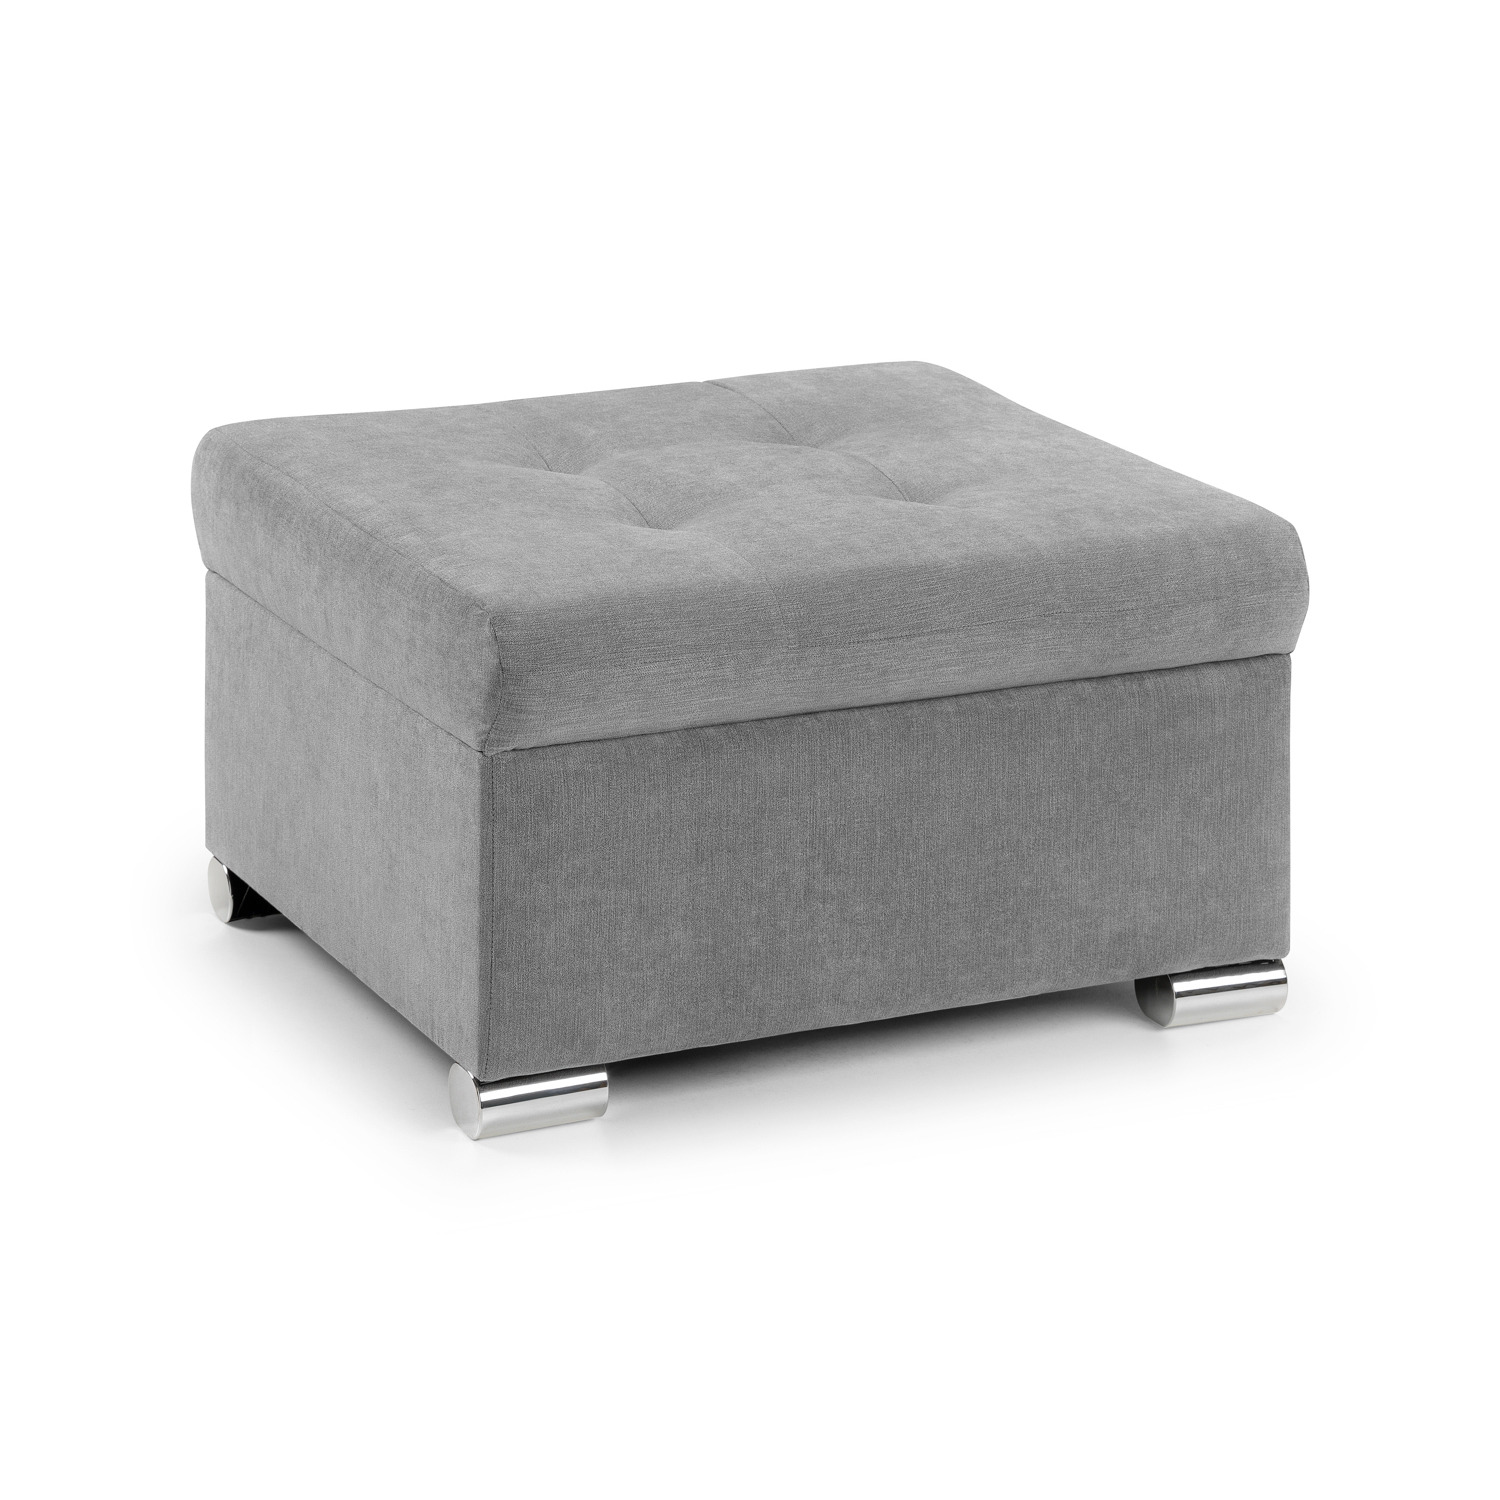 Malvi Sofabed Grey Footstool - image 1